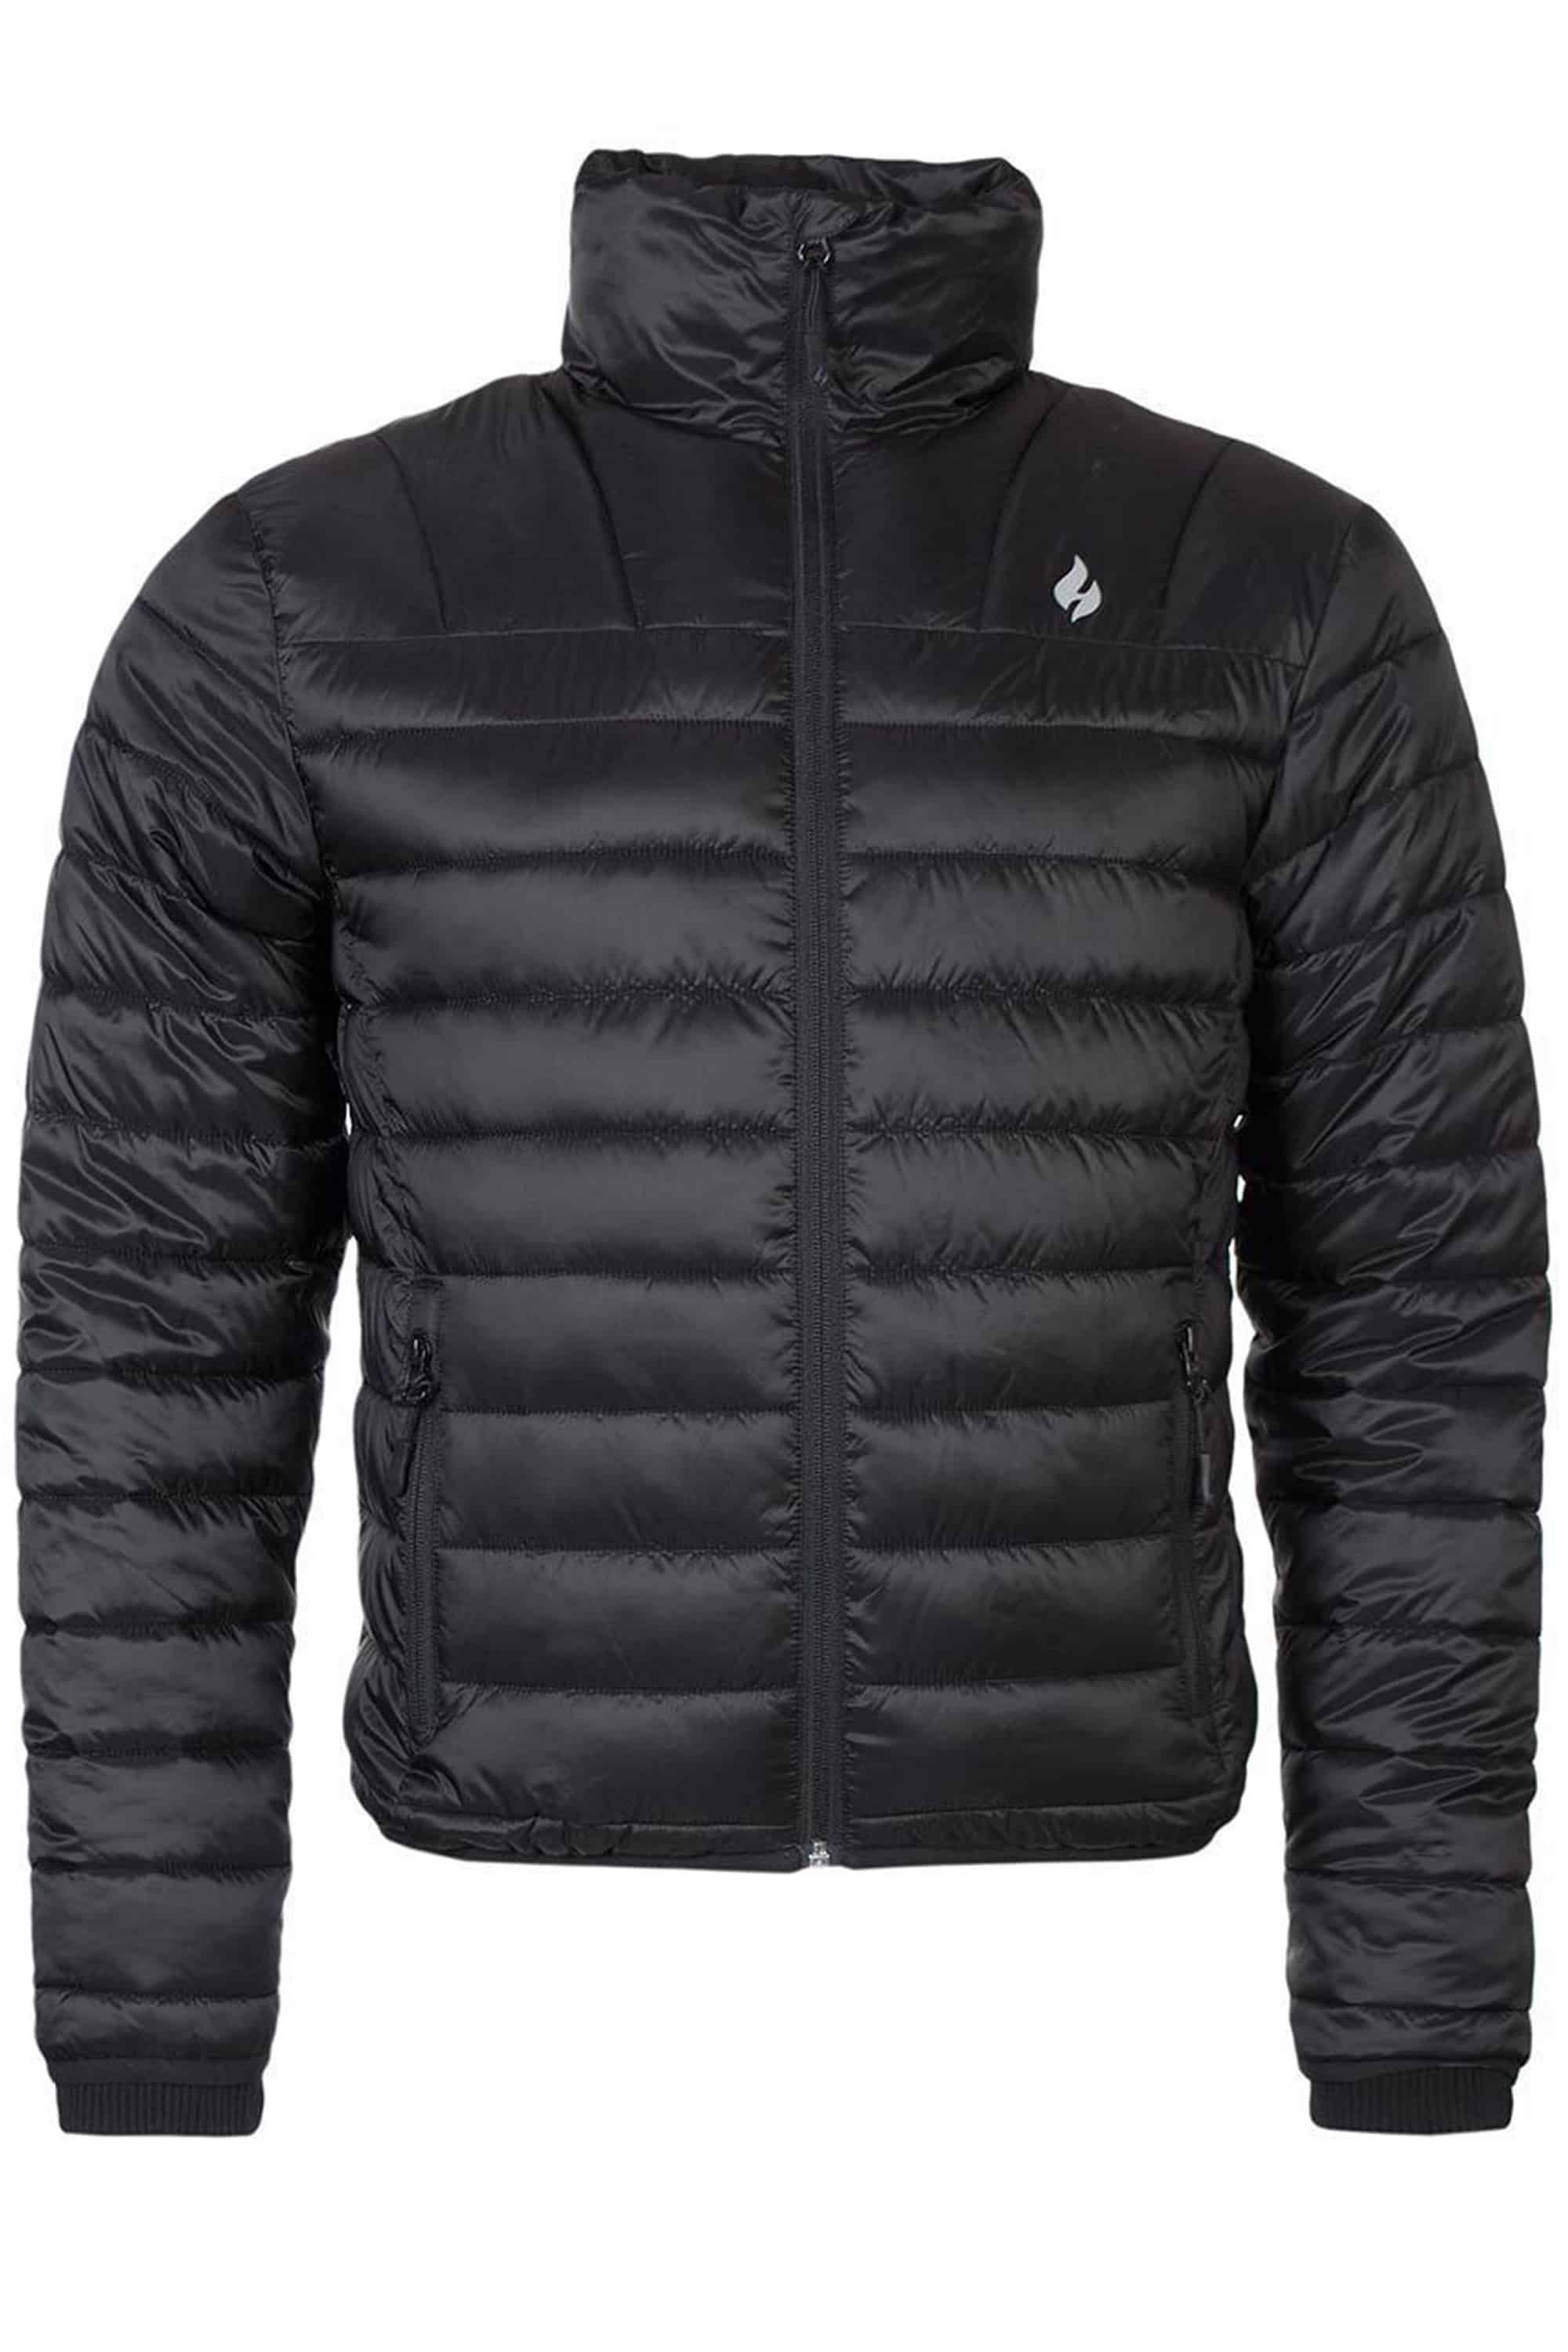 Men's Thermal Waterproof Fleece Lined Puffer Jacket Coat in a Bag